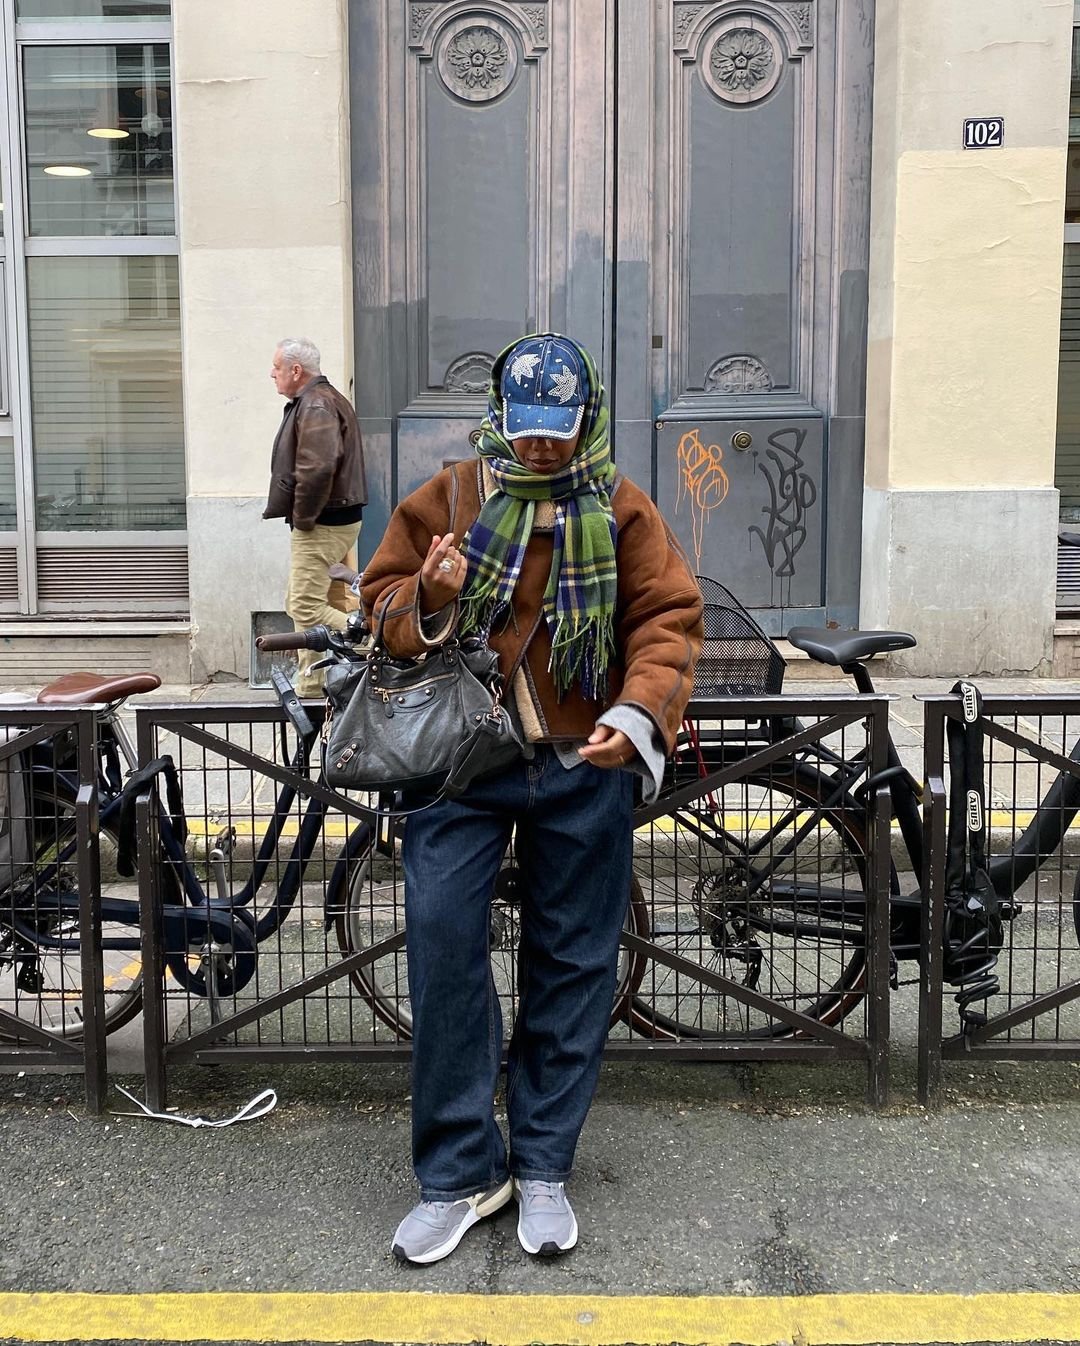 @blackmaroccan - casaco-marrom-cachecol-xadrez-boné-jeans-calça-tenis-bolsa - looks de frio - inverno - Paris - https://stealthelook.com.br